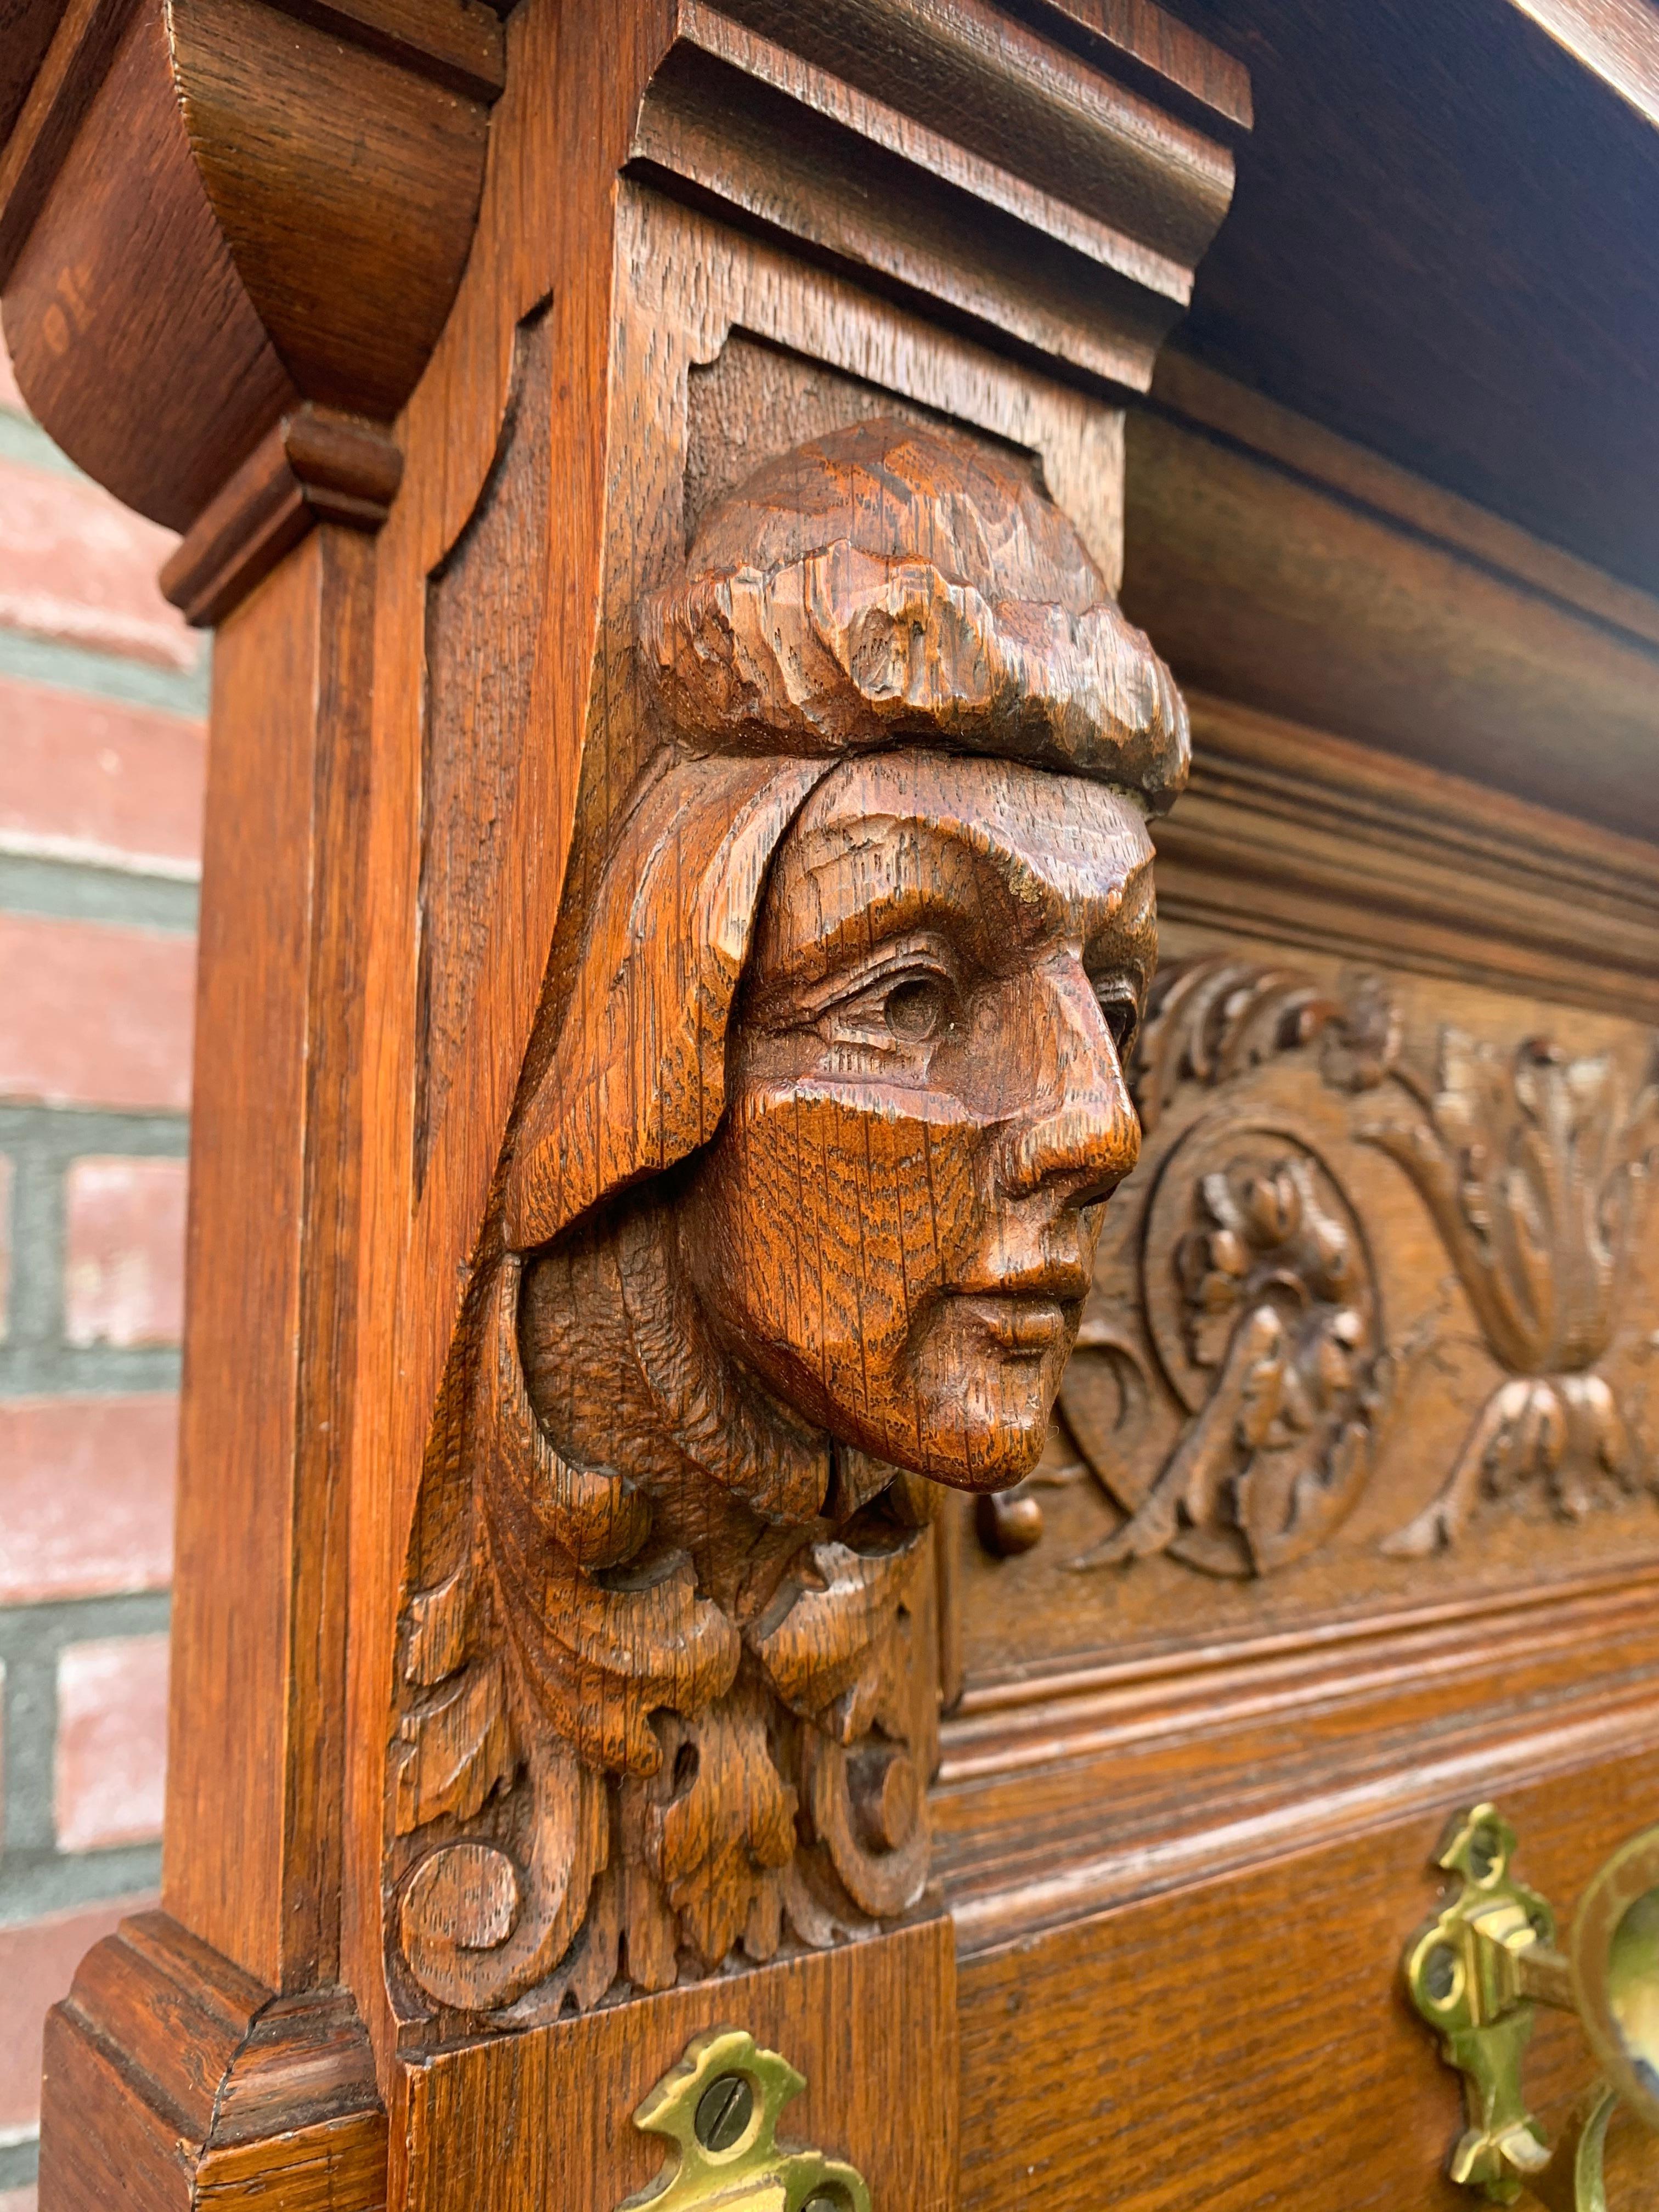 Beveled Antique Magnificently Carved Renaissance Revival Hall Coat Rack & Umbrella Stand